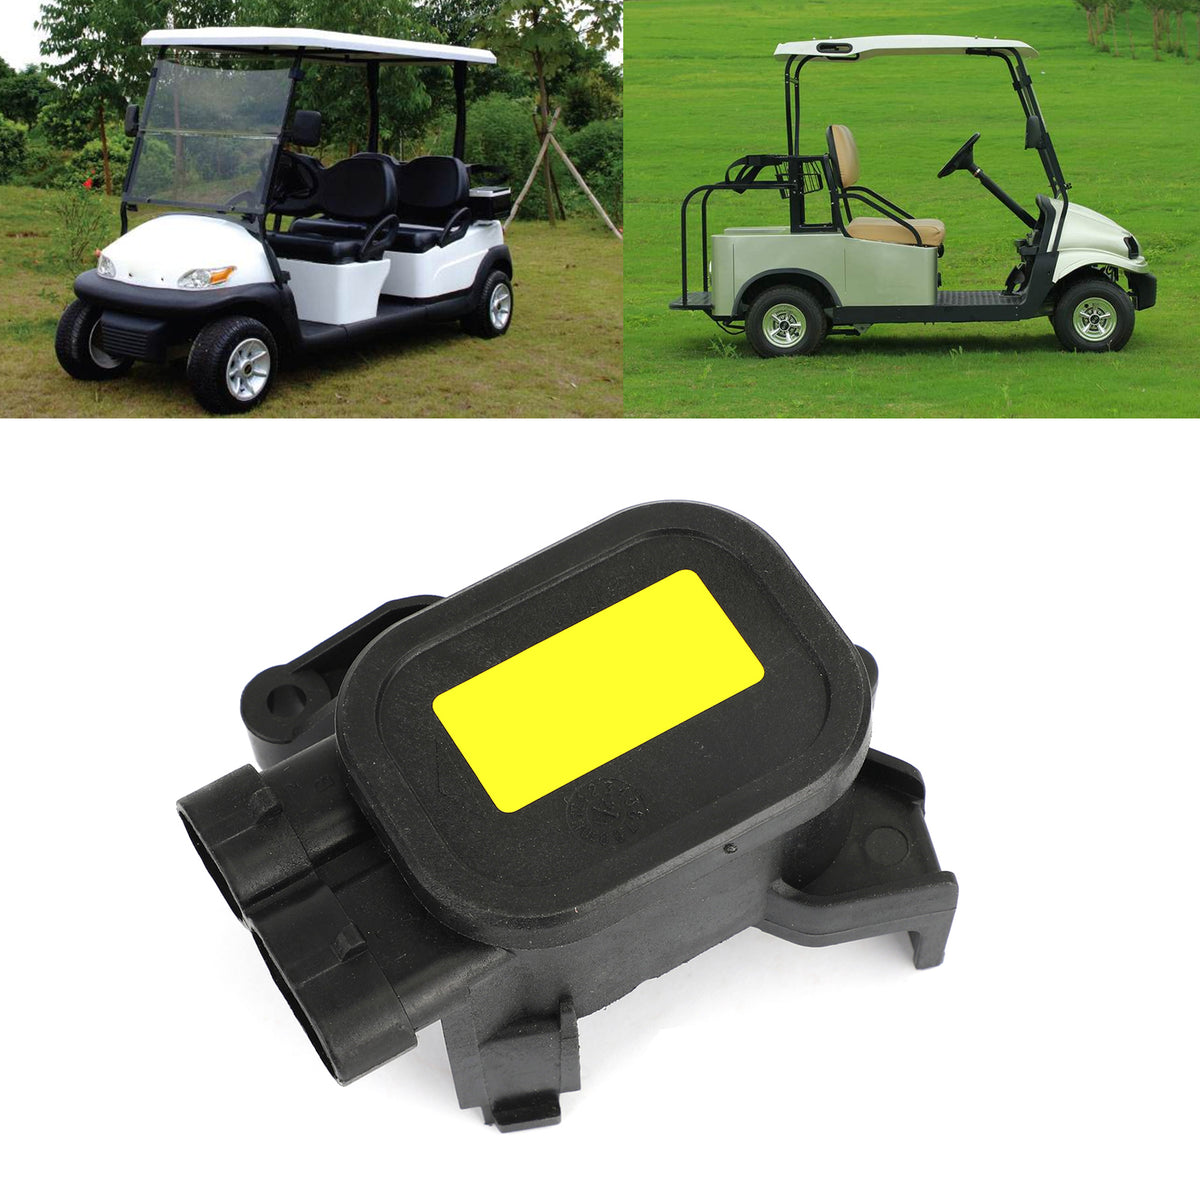 Drosselklappenpotentiometer passend für Precedent Golf Car DS Club Car MCOR 4 105116301